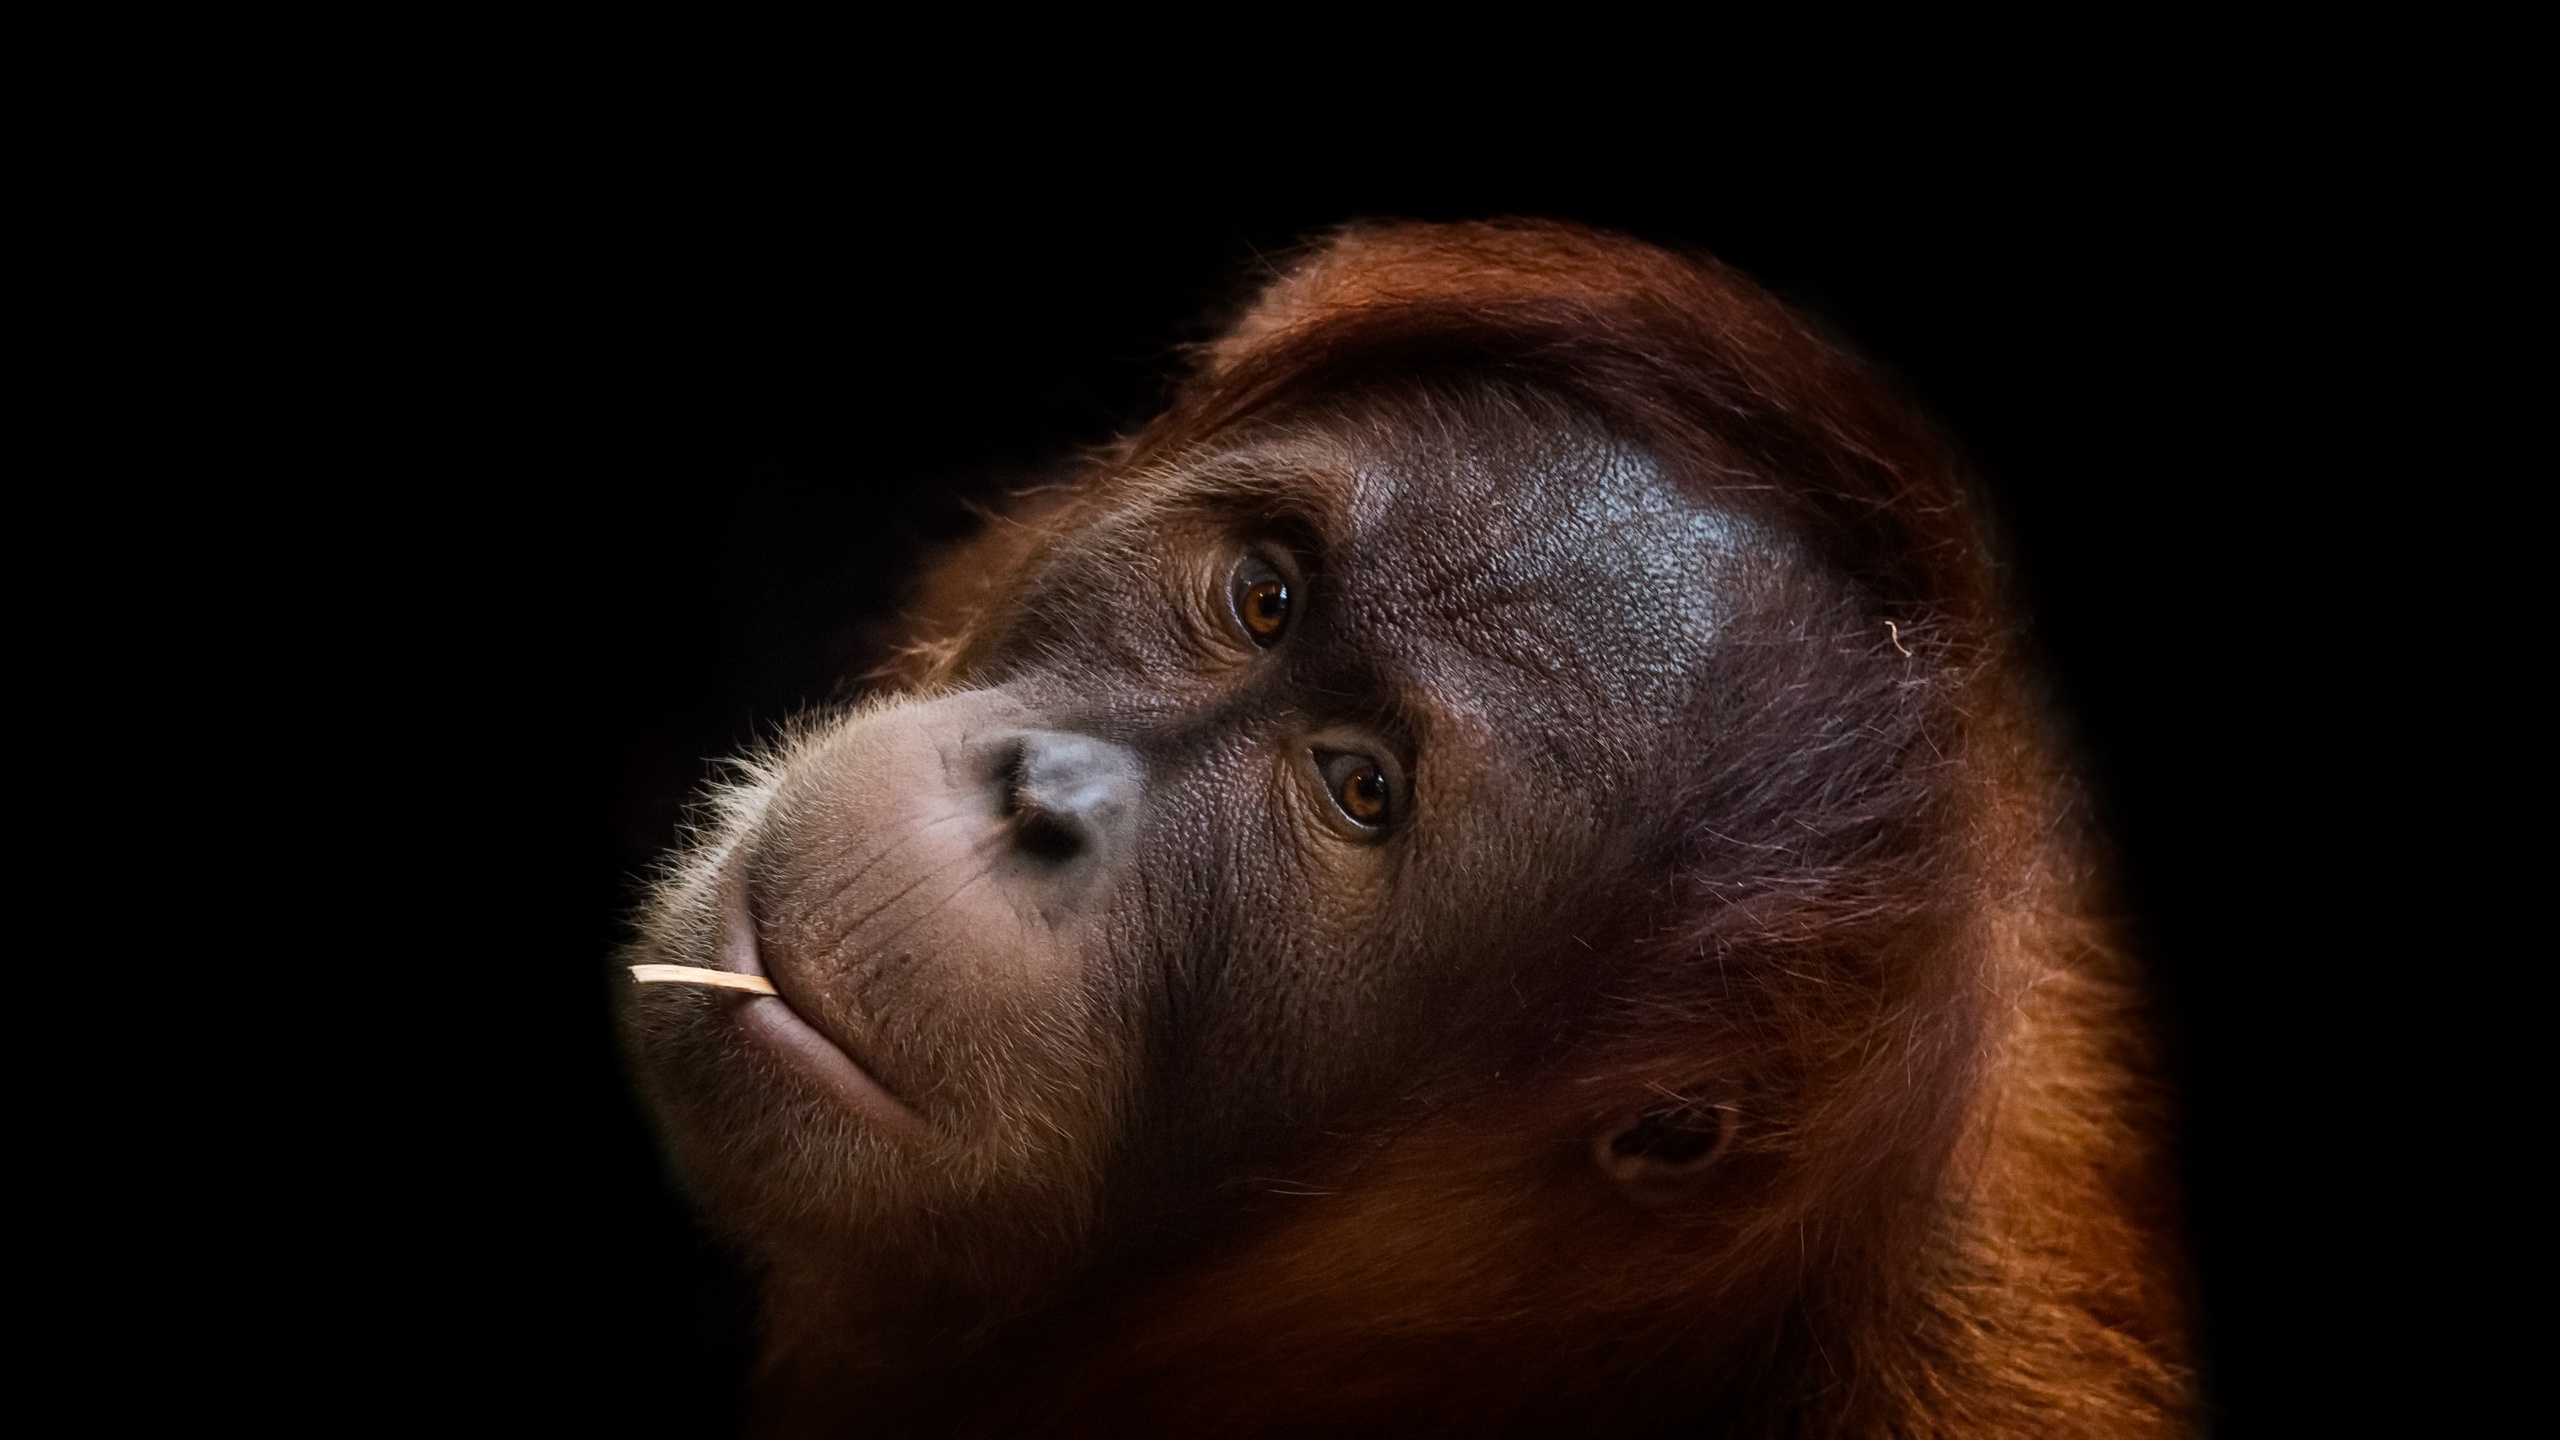 General 2560x1440 portrait face apes animals closeup simple background